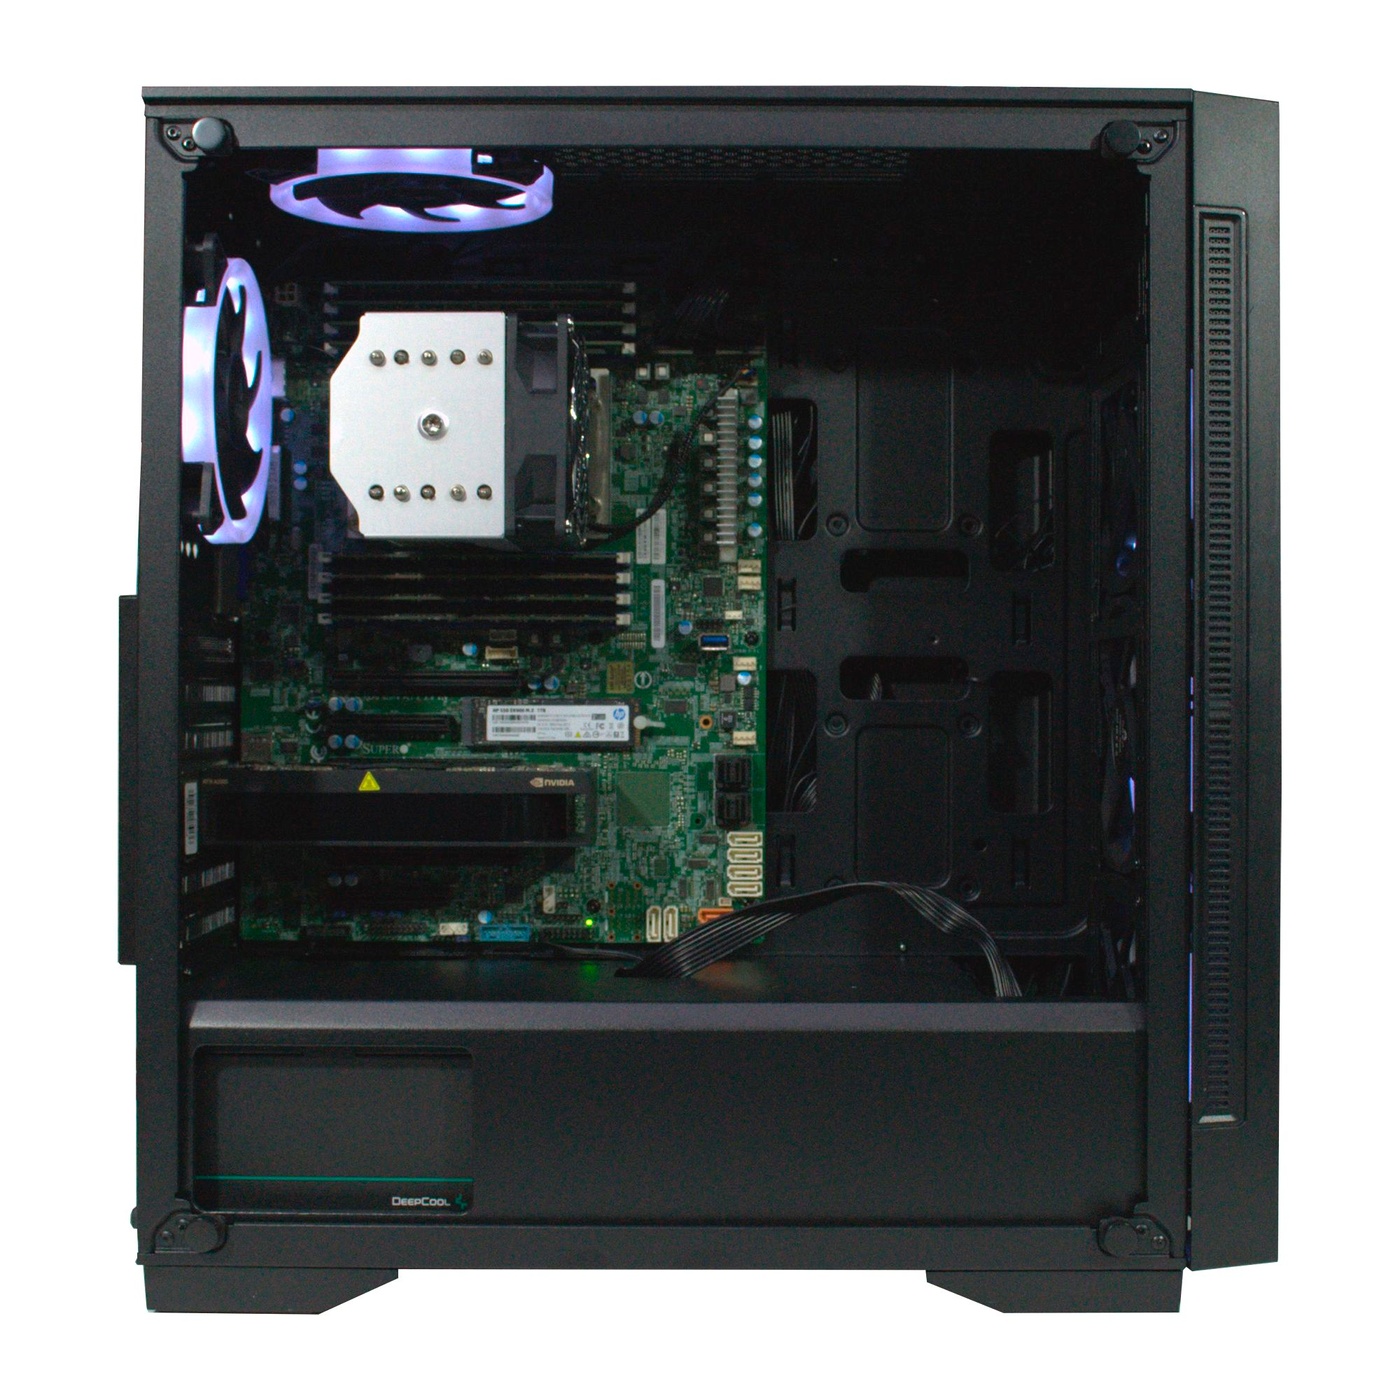 Робоча станція PowerUp #246 AMD EPYC 7282/64 GB/SSD 1TB/NVIDIA Quadro RTX A2000 6GB